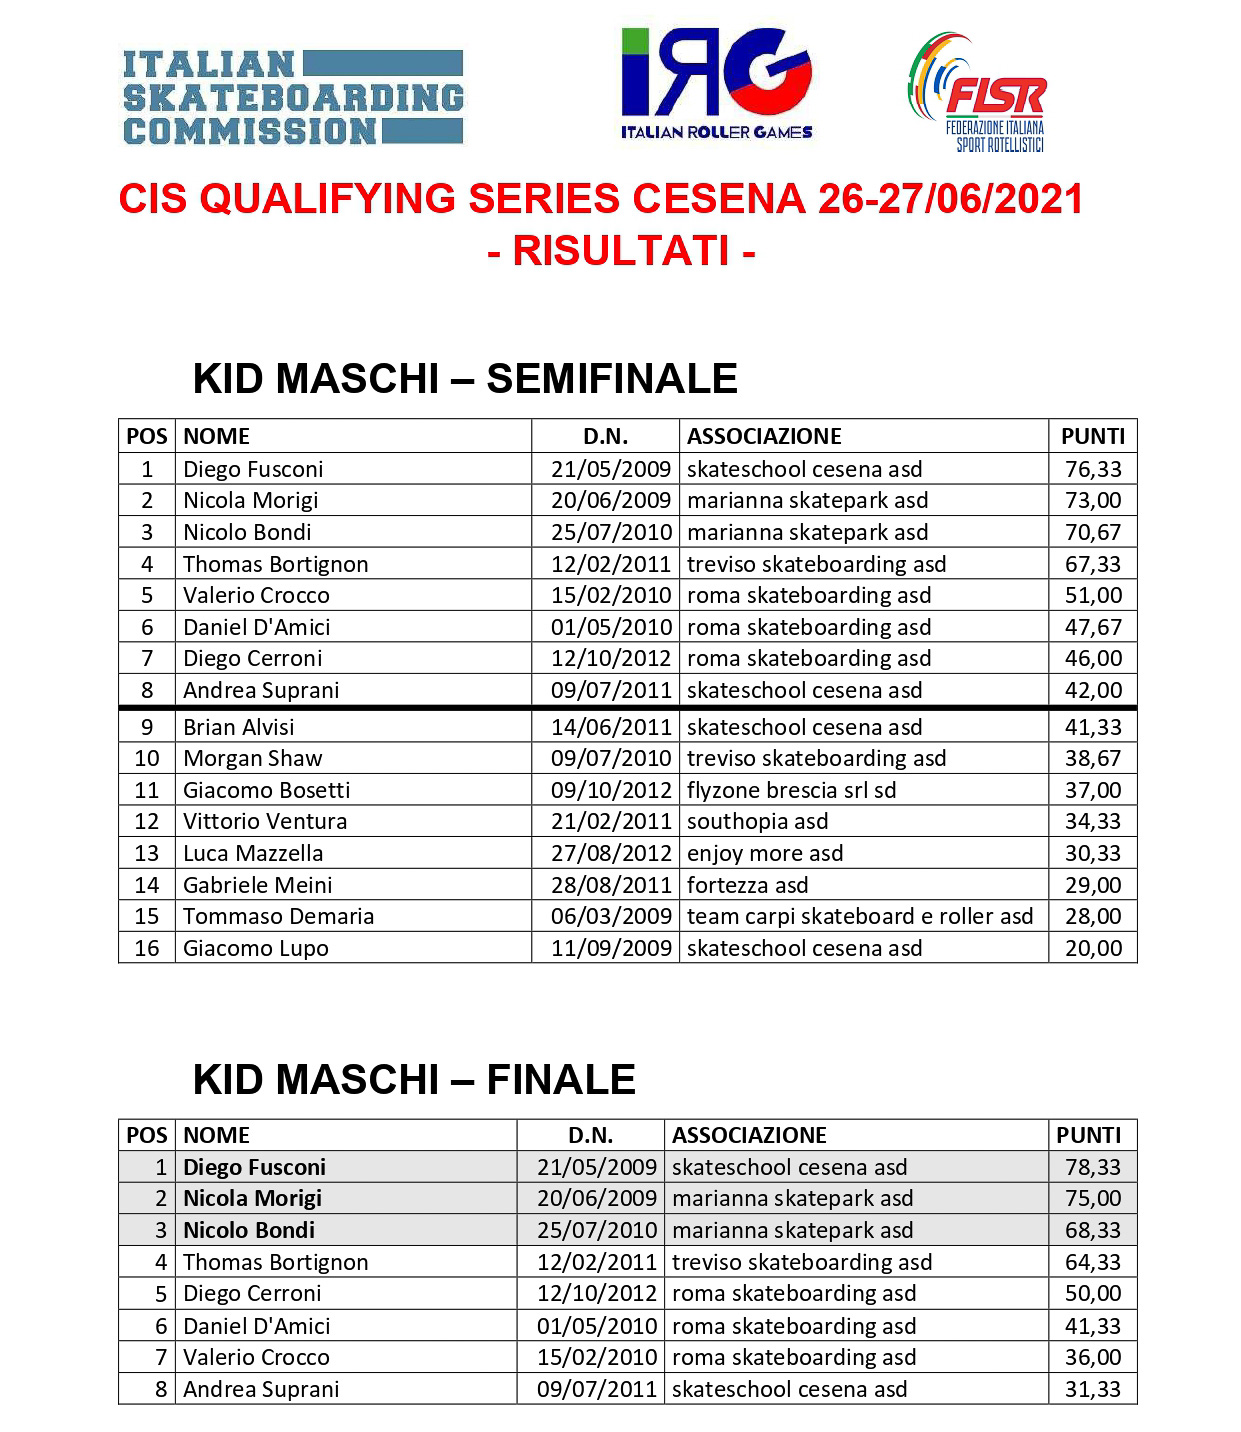 Classifiche Qualifying Series Cesena - Kid Maschi Finali